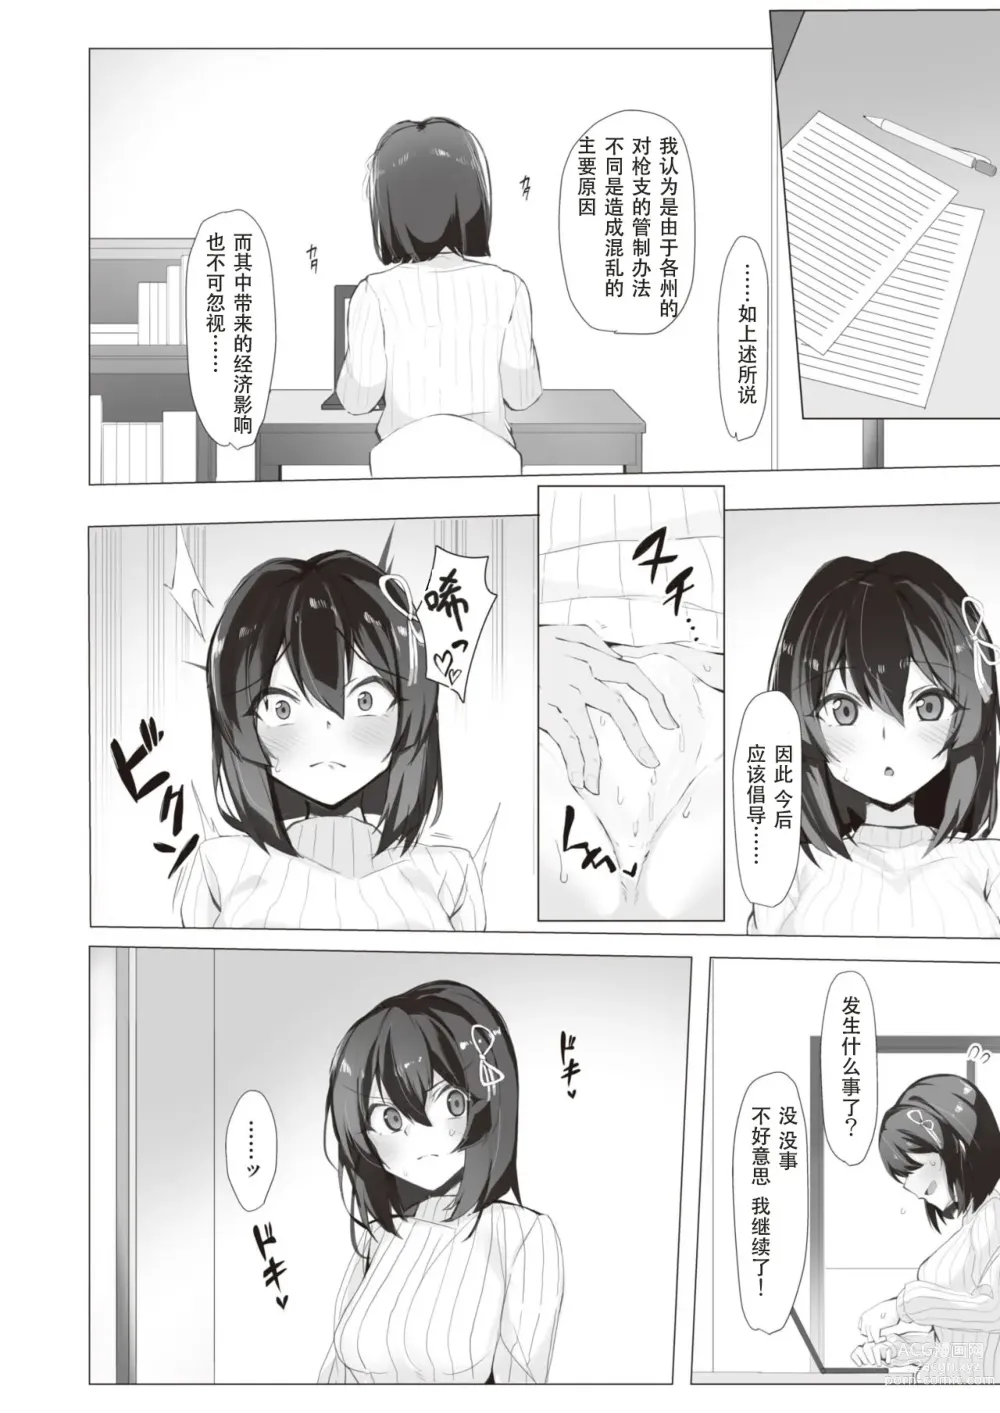 Page 6 of manga Koujimaooshi - Study or Fuck?